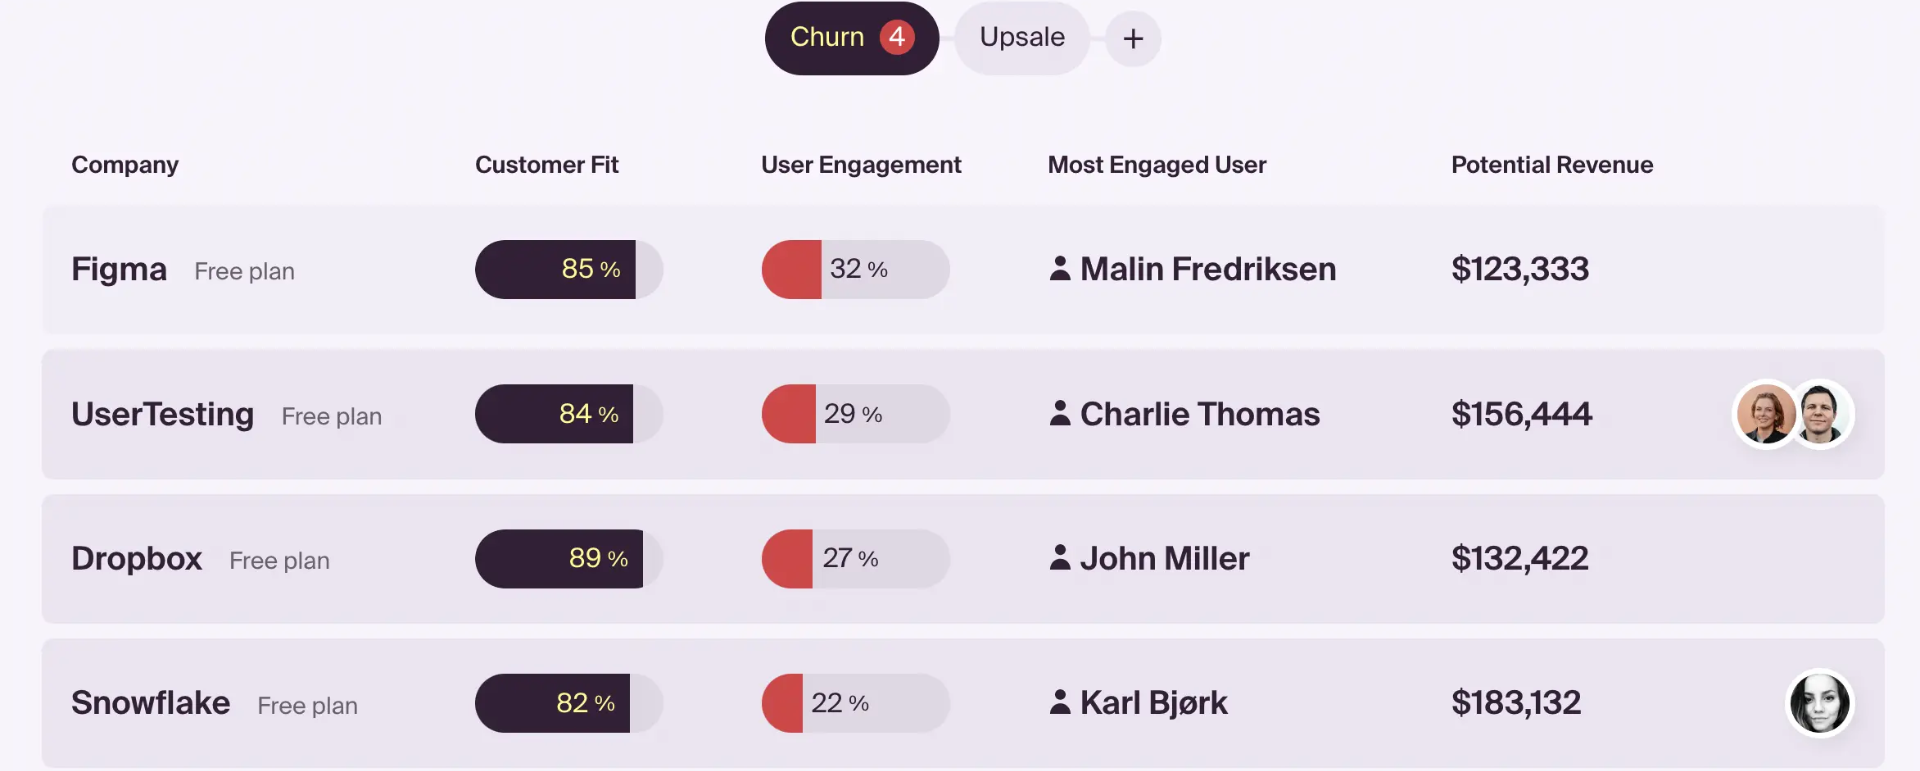 Breyta User Engagement scores showing potential churn 